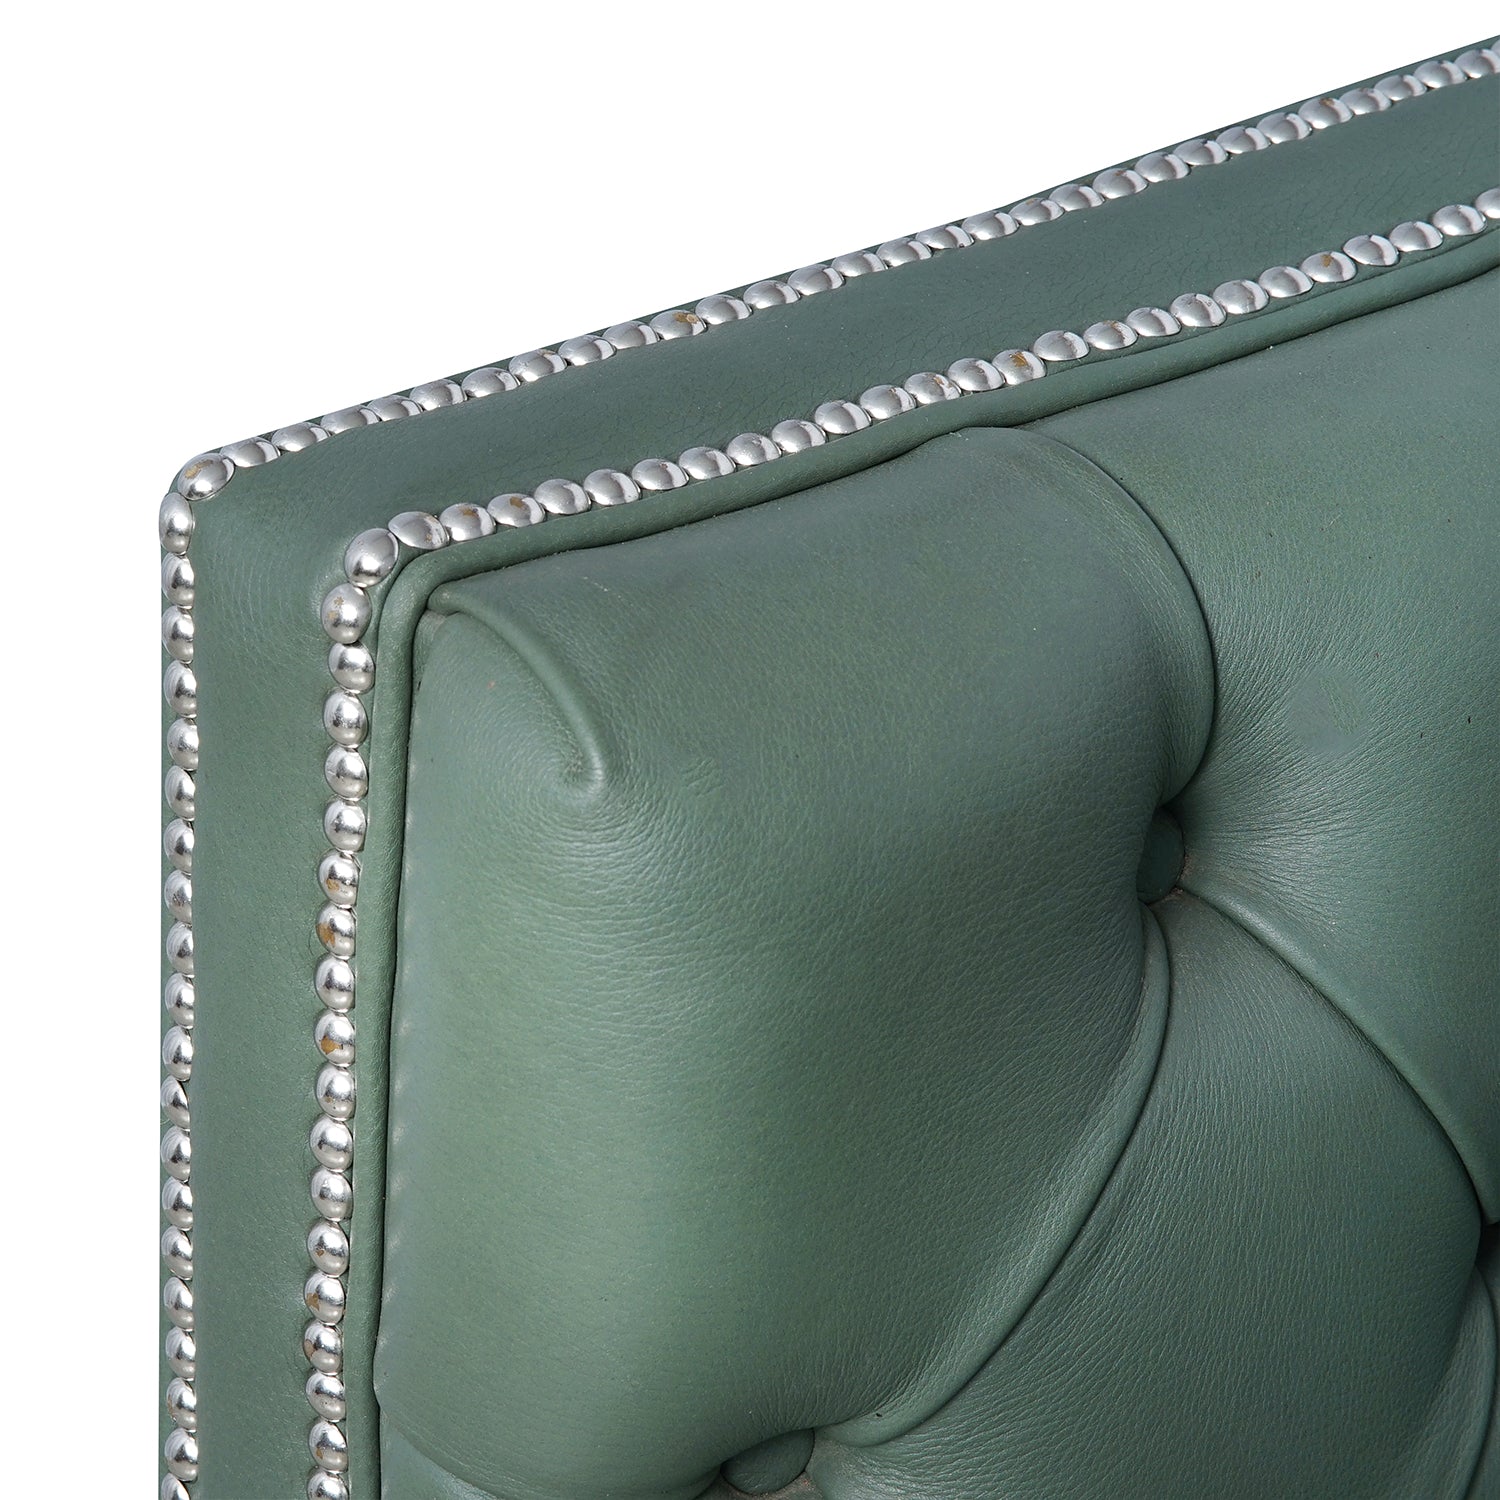 Williams Leather Chair Close Up Brass Naildhead